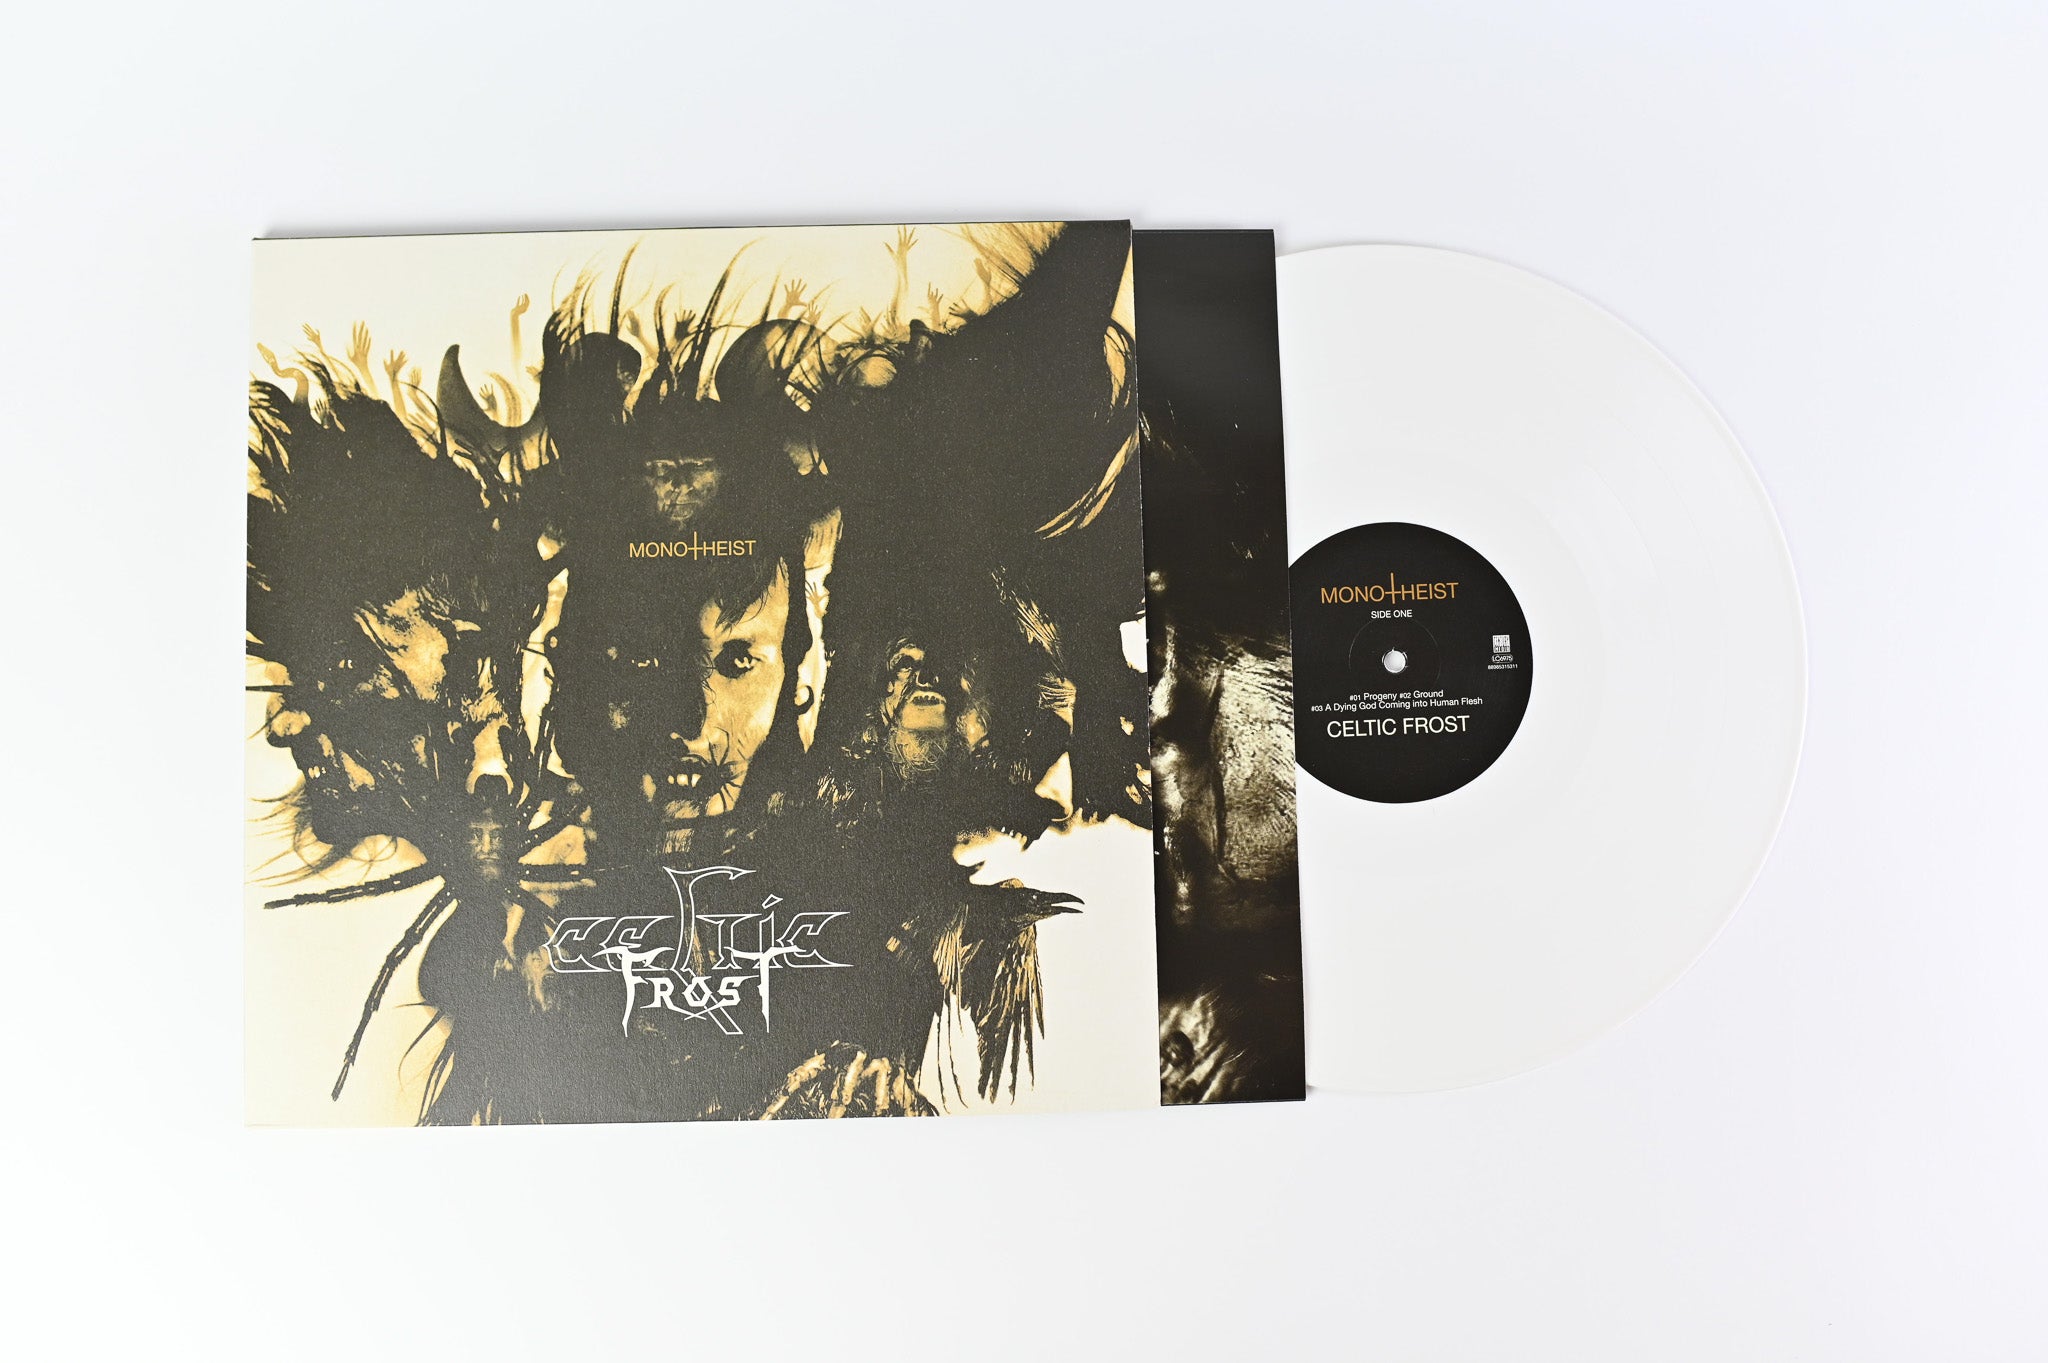 Celtic Frost - Monotheist on Century Media Ltd White Vinyl Reissue